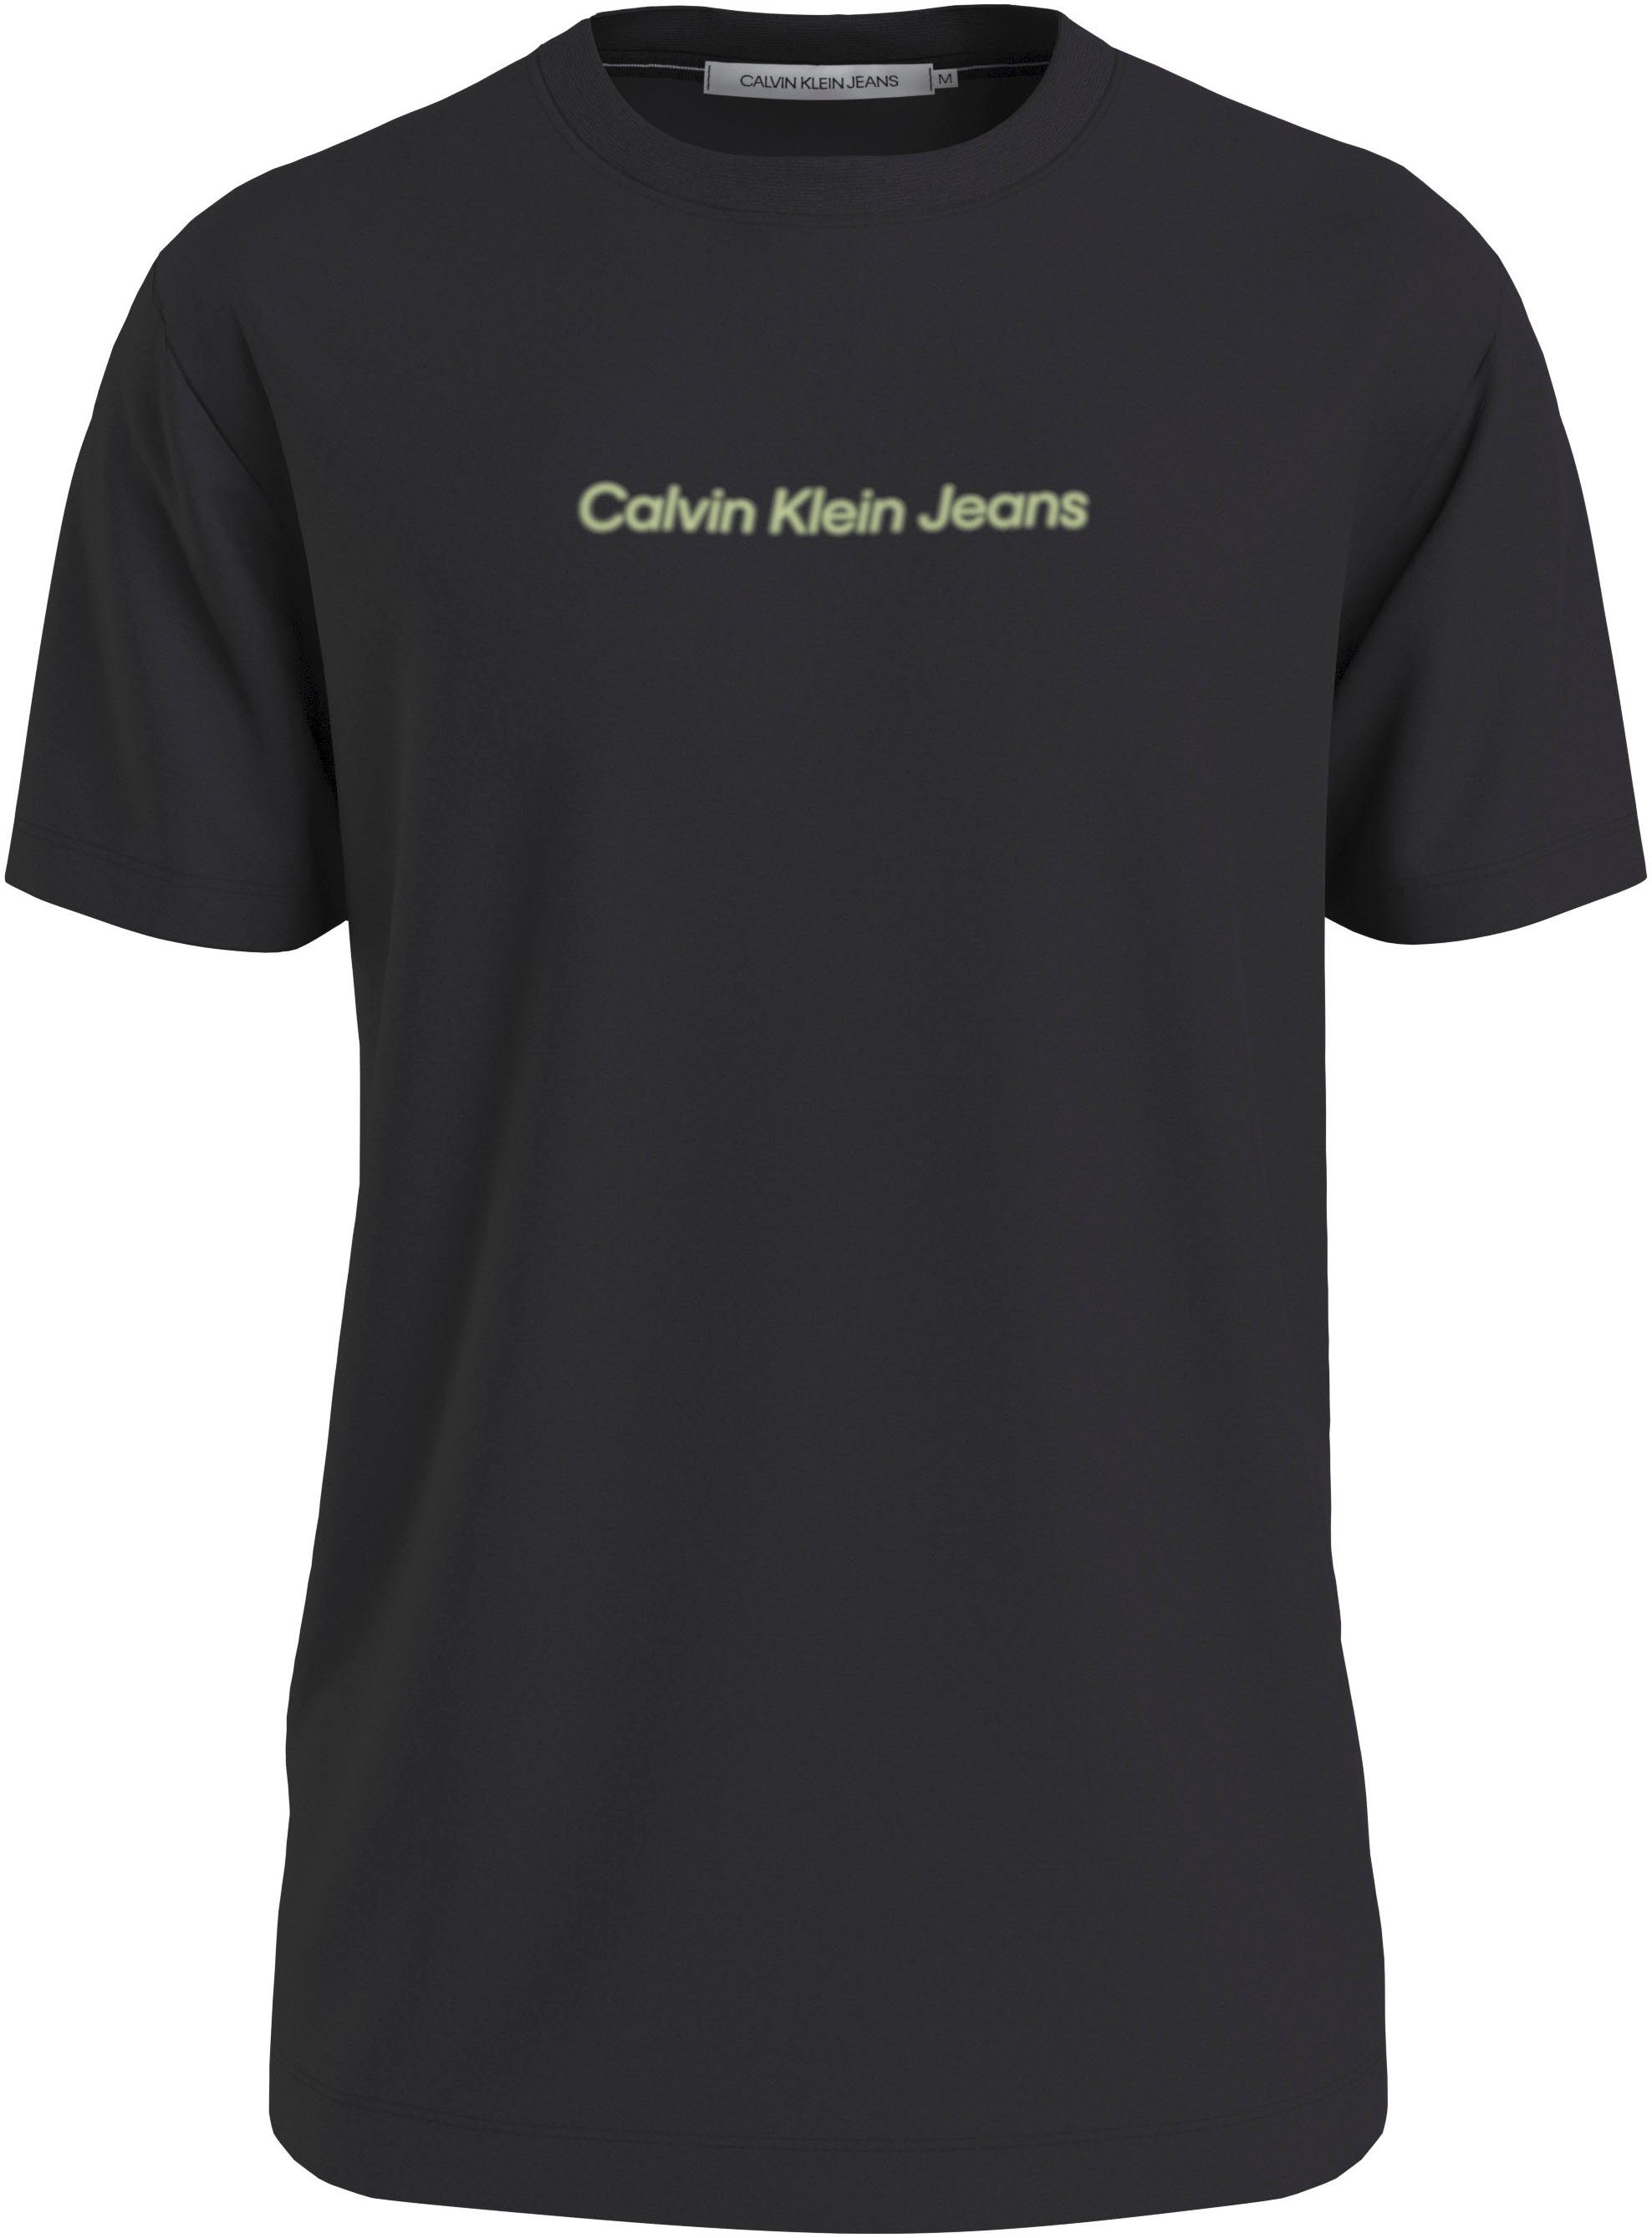 Jeans TEE Klein Ck Calvin Plus LOGO PLUS T-Shirt CK Black MIRRORED